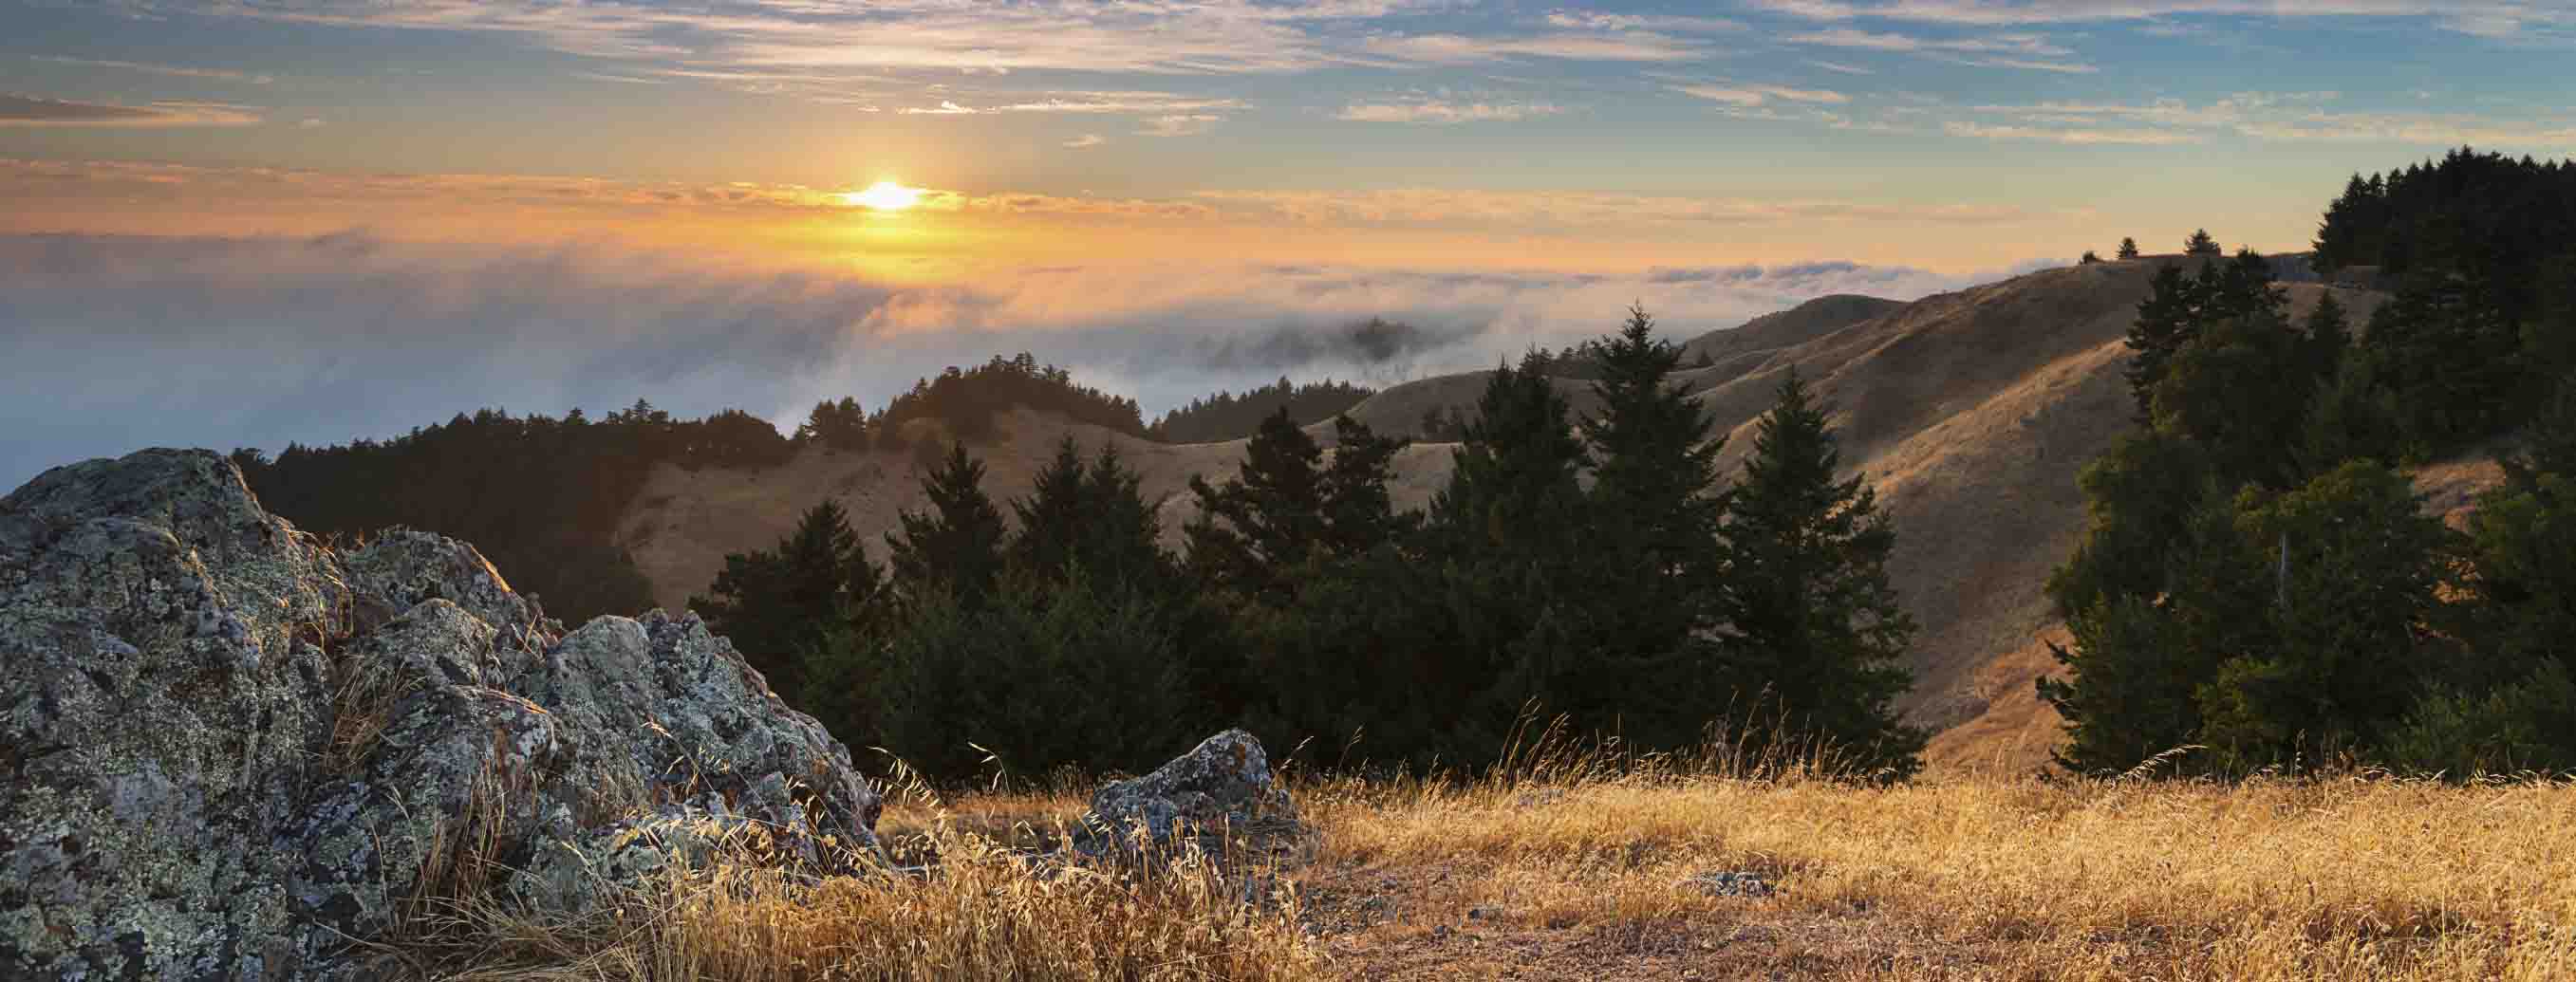 Marin County hills